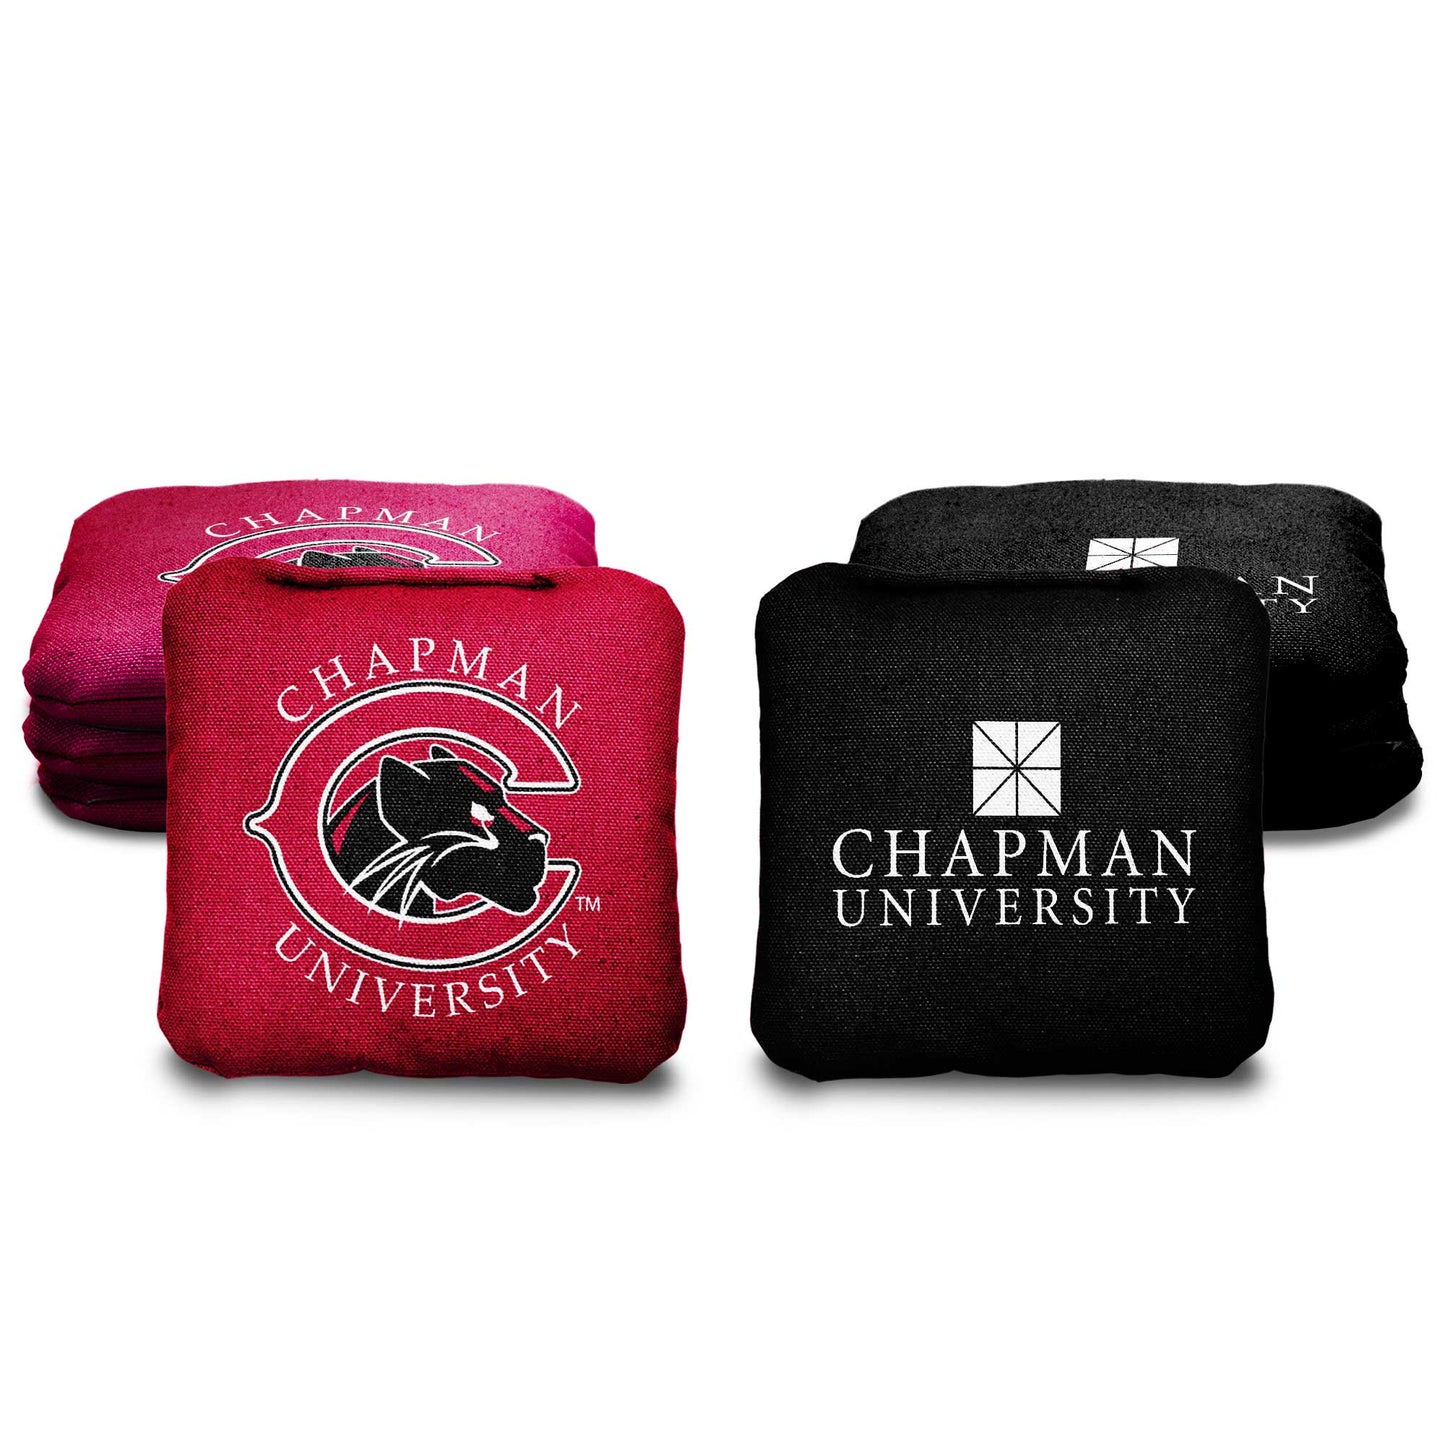 Chapman University Cornhole Bags - 8 Cornhole Bags